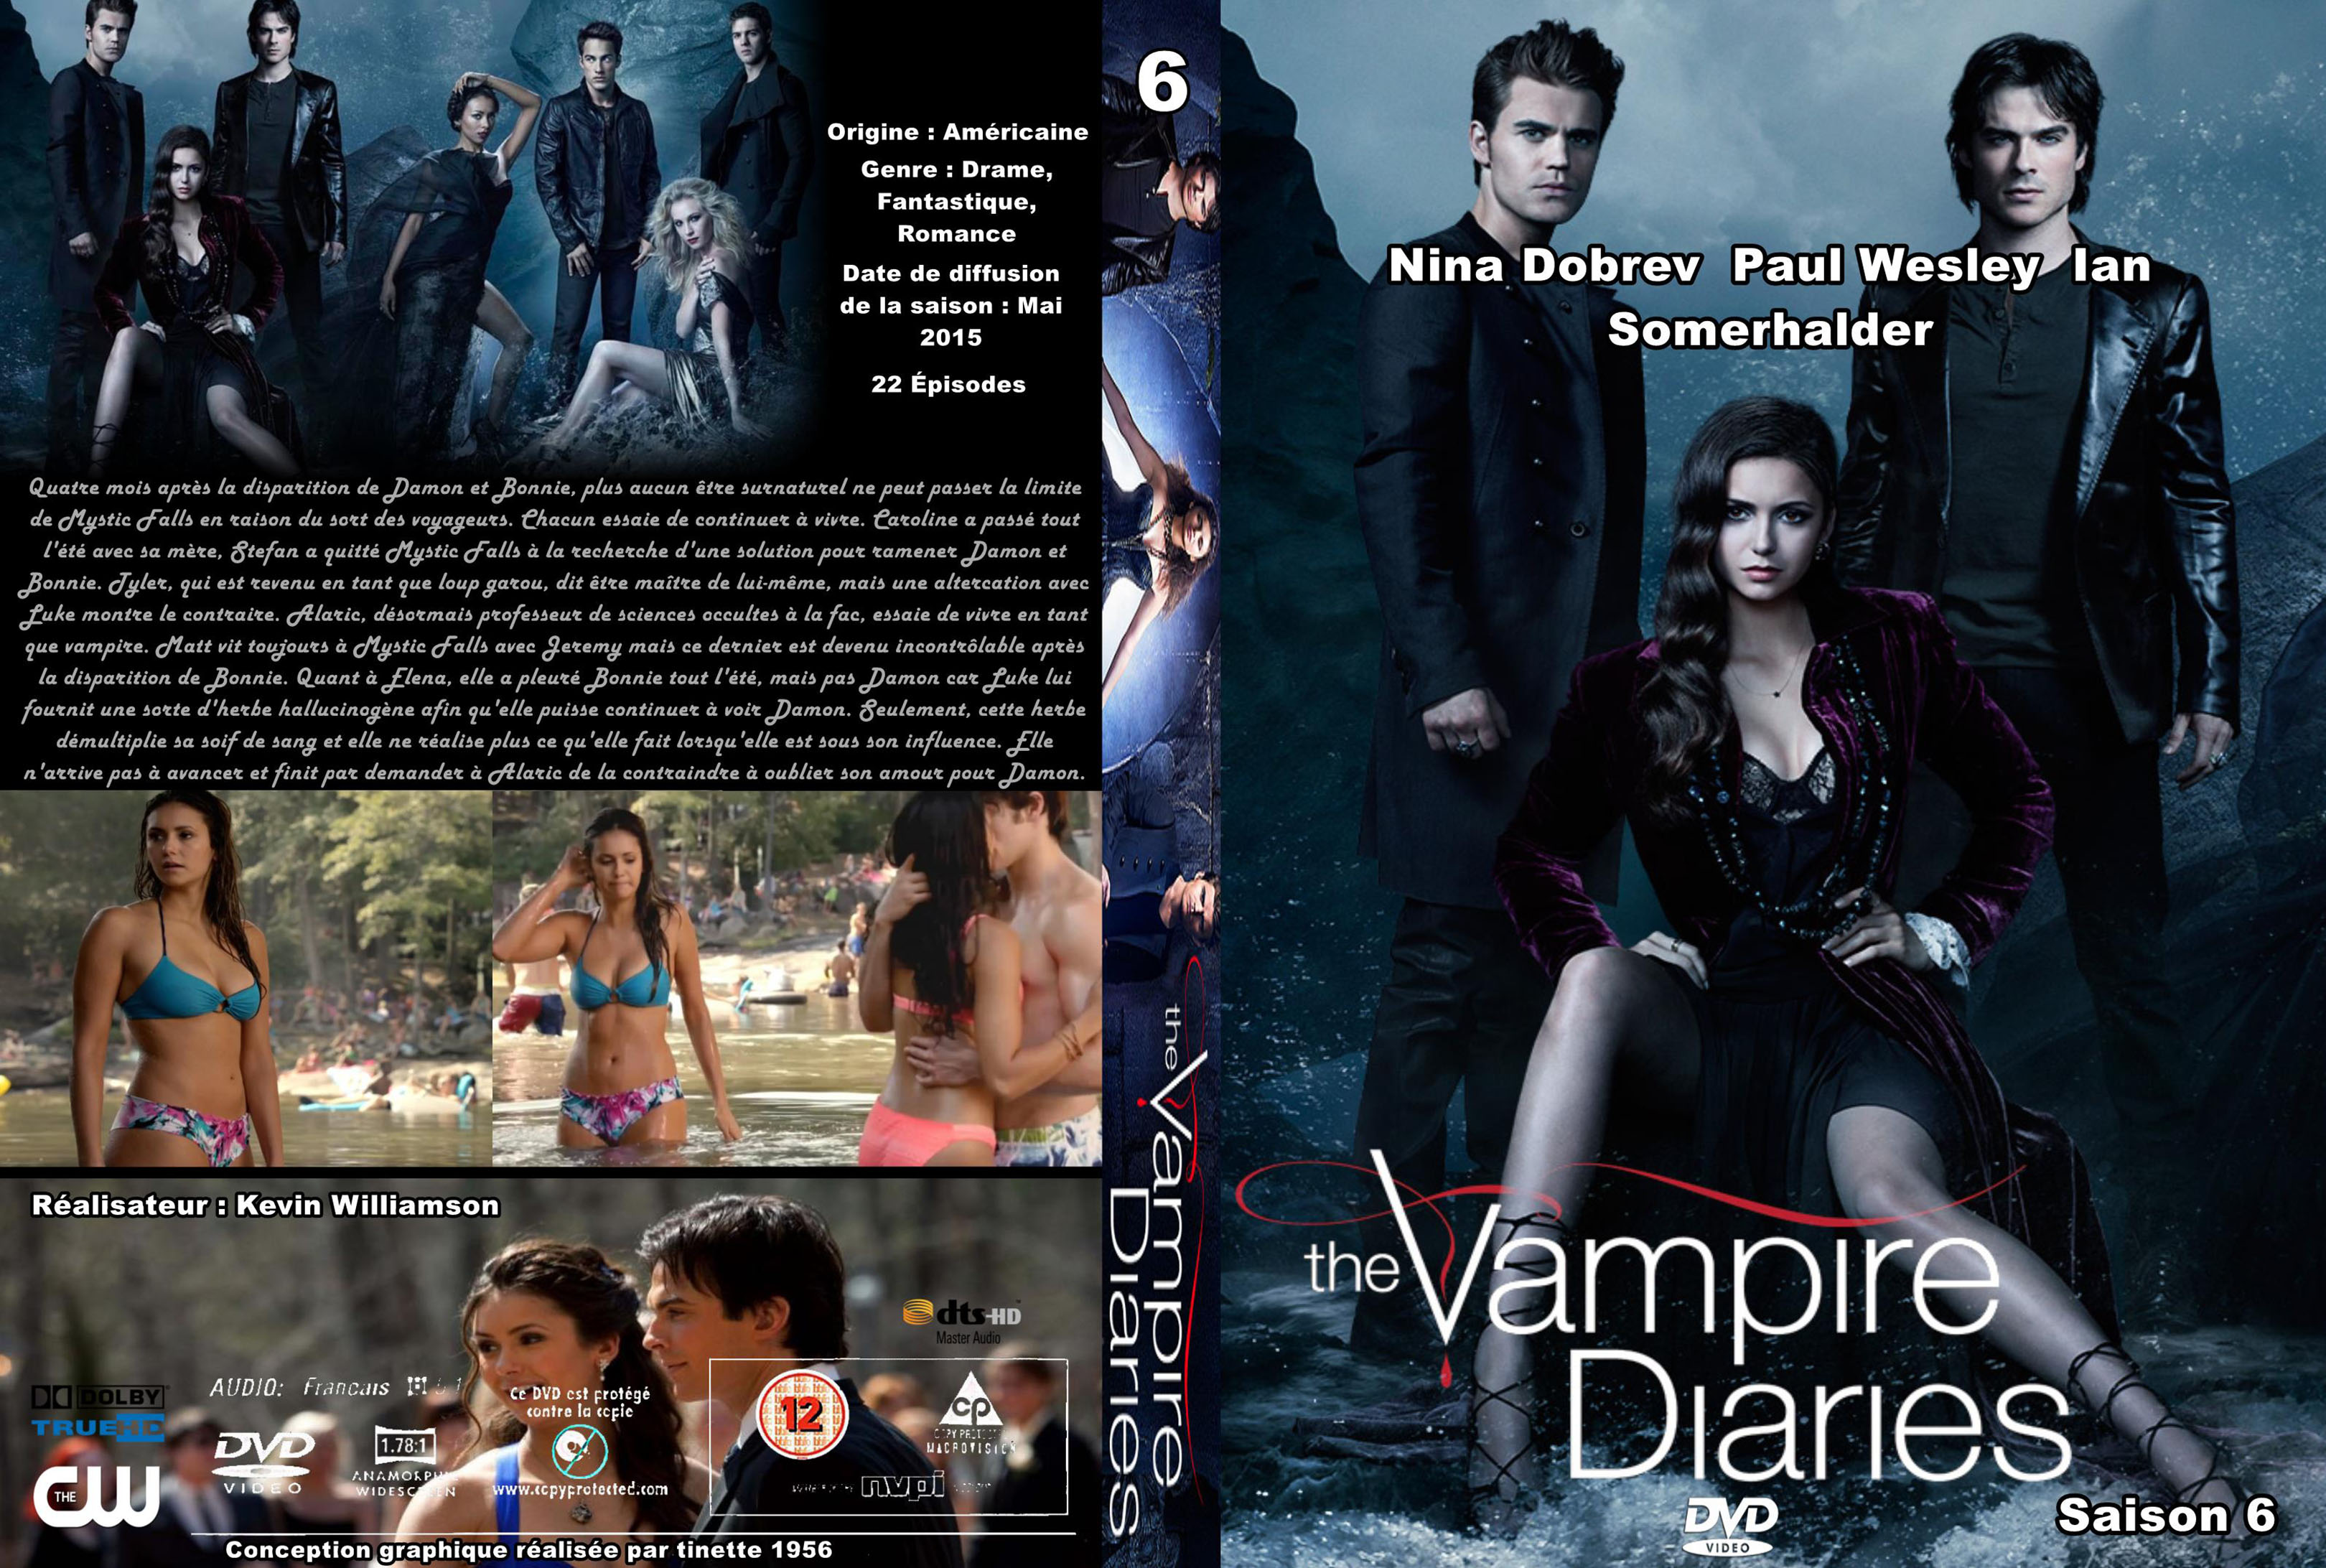 Jaquette DVD The vampire diaries Saison 6 custom